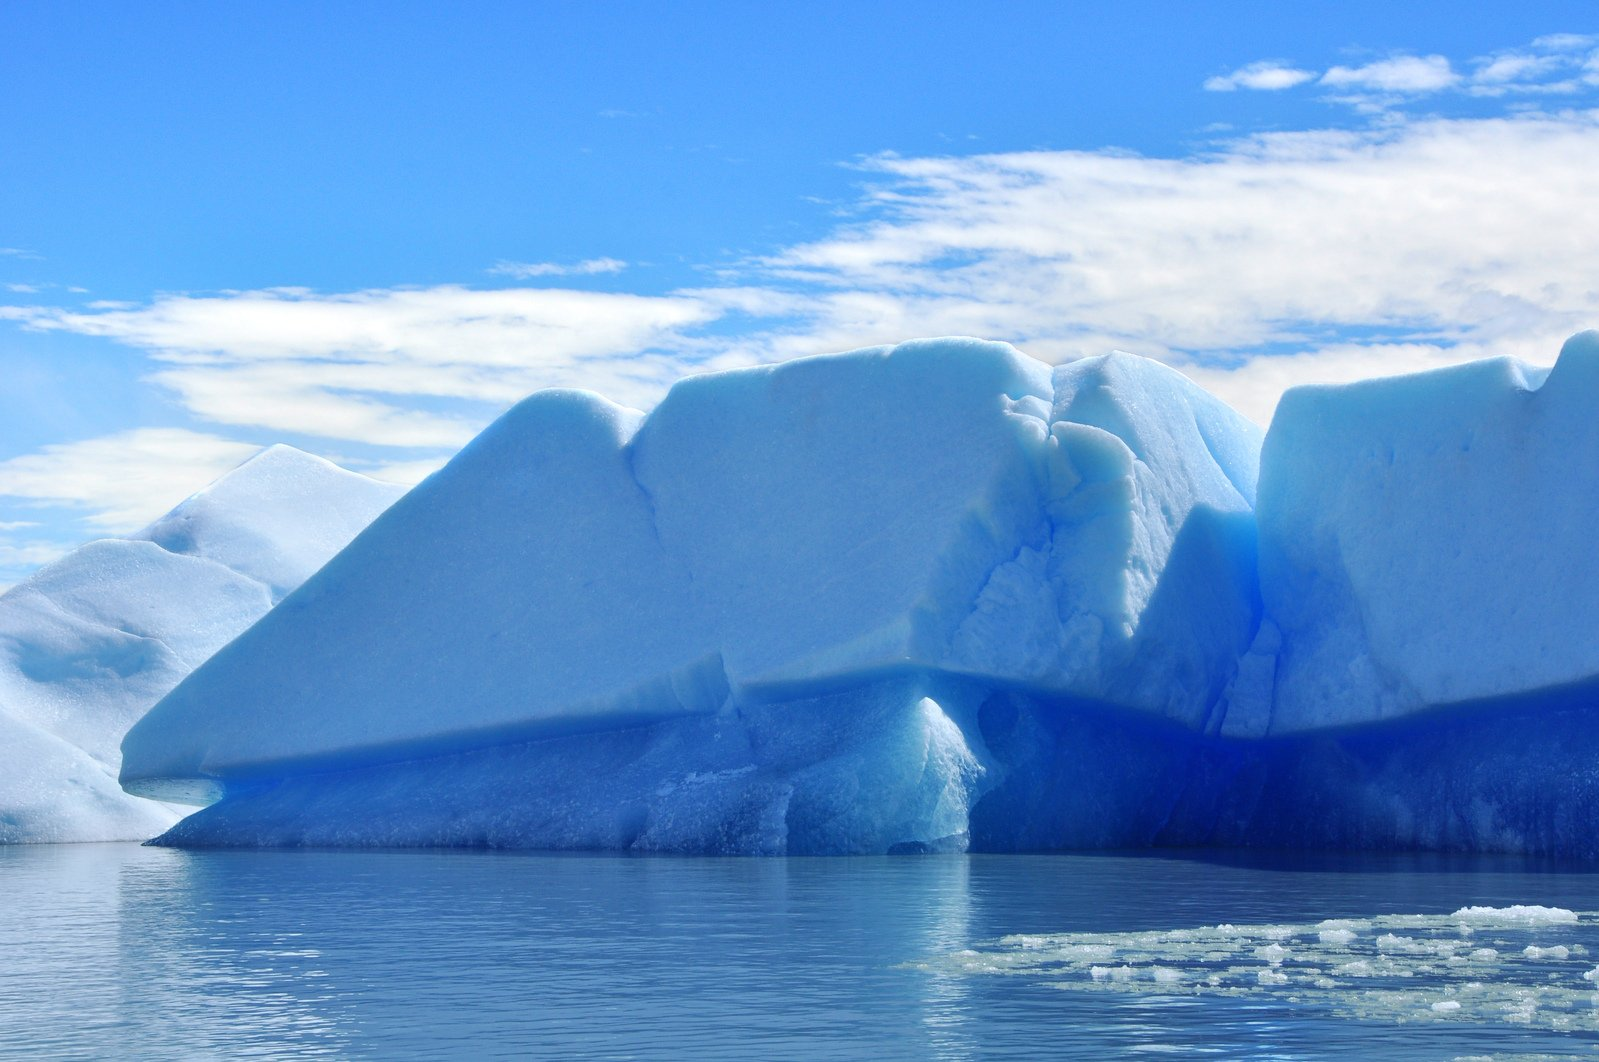 Лед 2 океан. Арктика Северный Ледовитый океан. Северный Ледовитый океан полюс. Ледники Северного Ледовитого океана. Айсберги Северного Ледовитого океана.